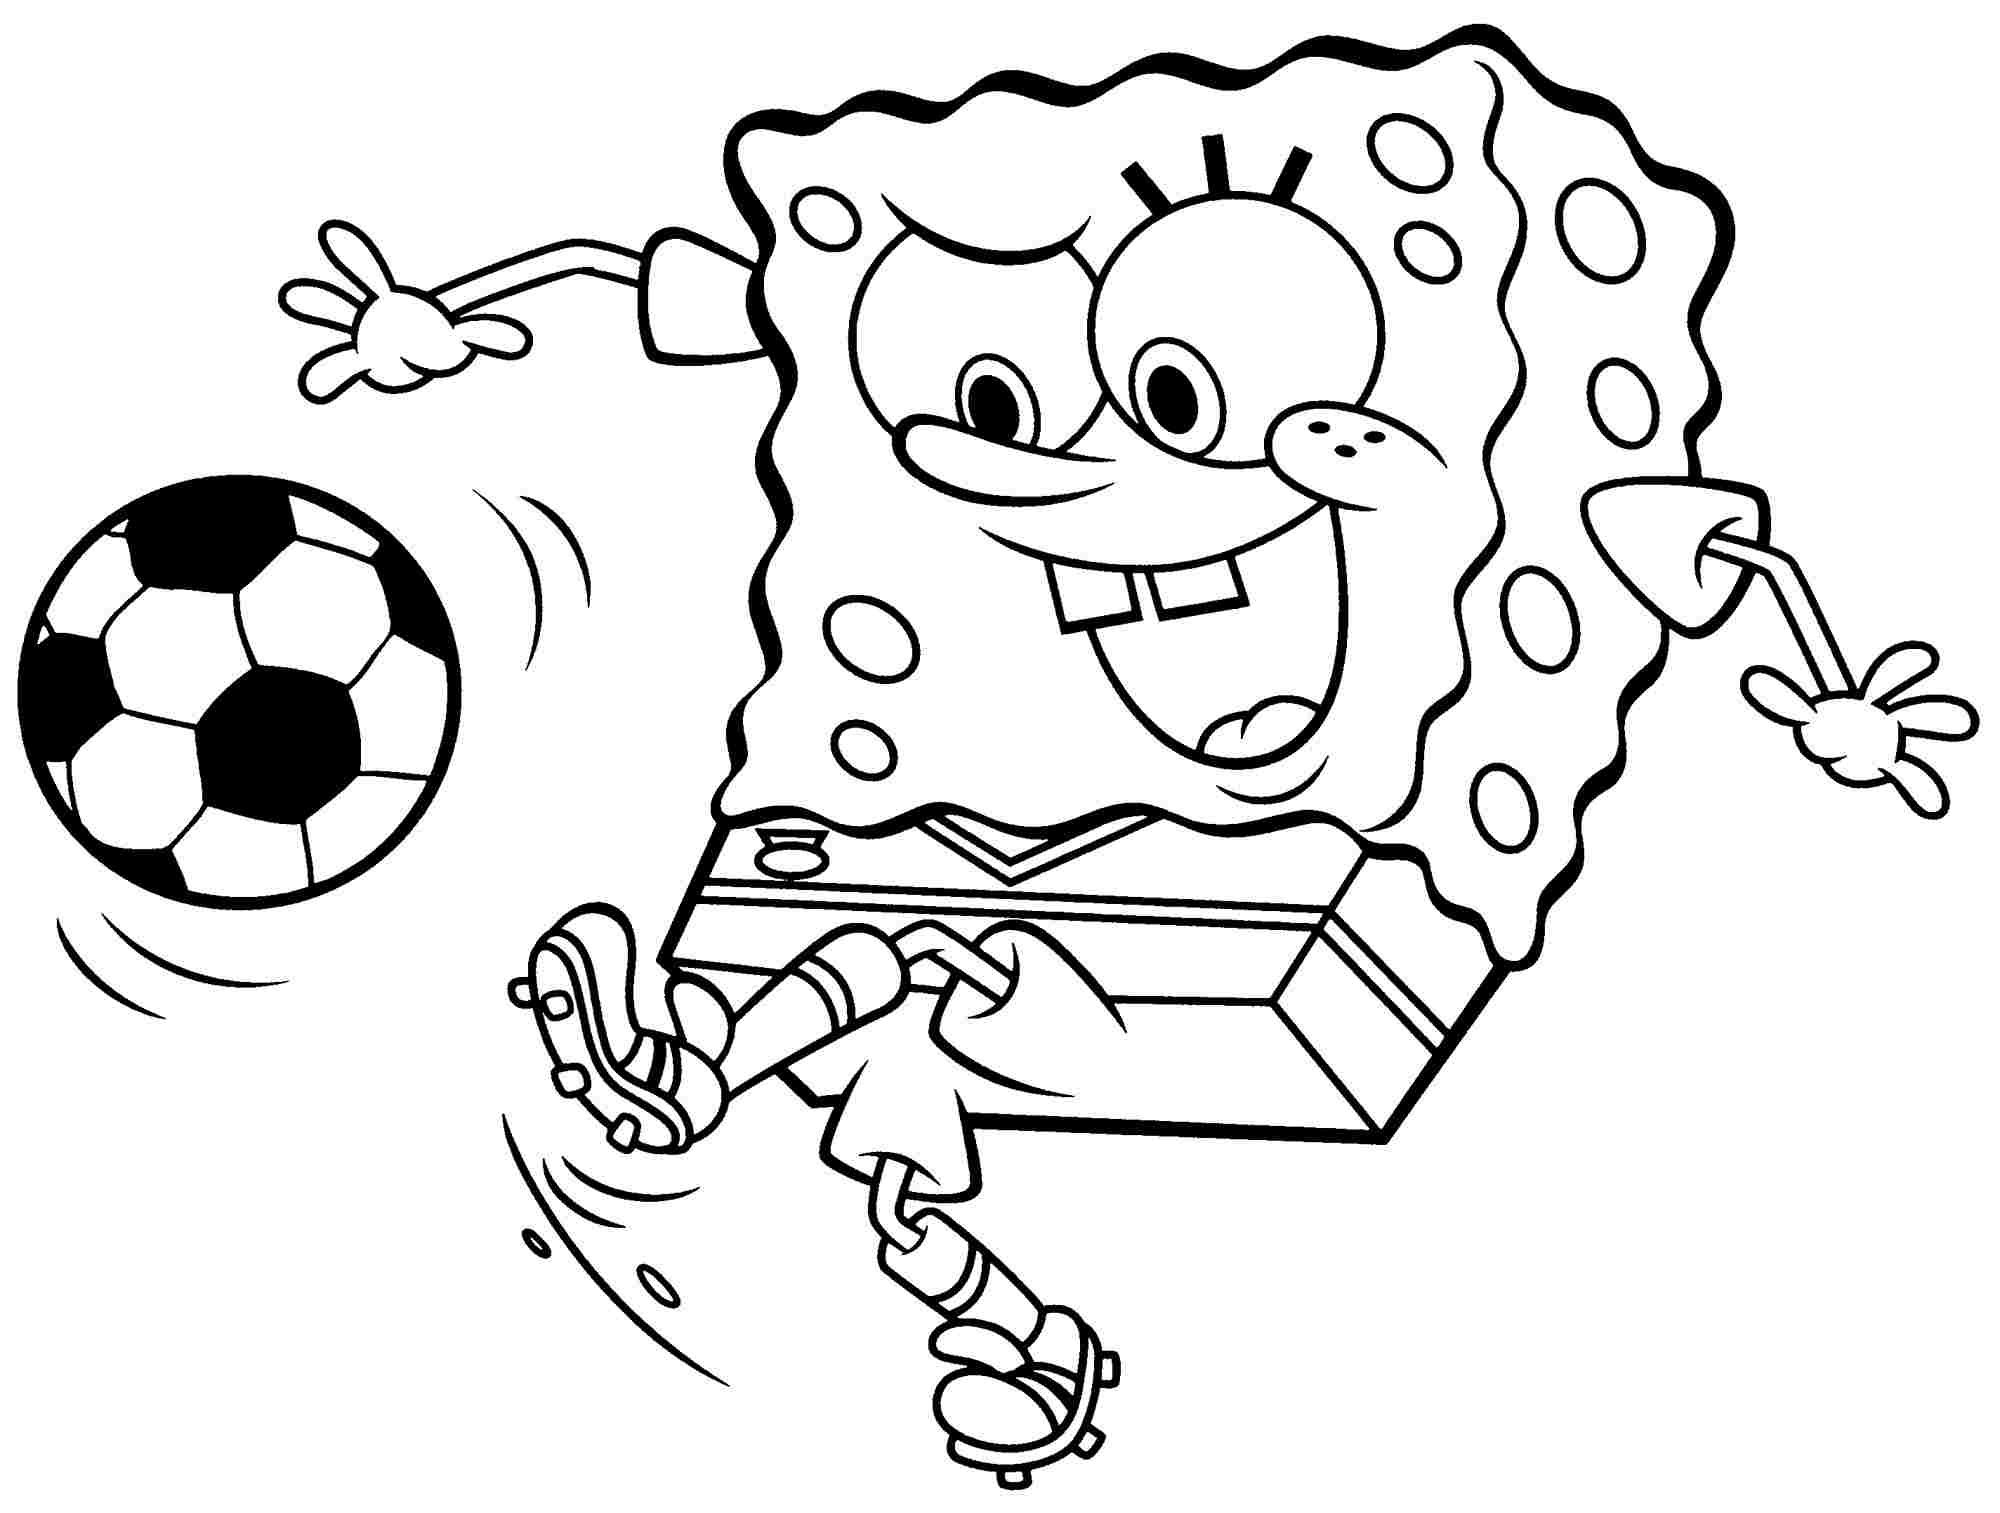 Spongebob Play Soccer